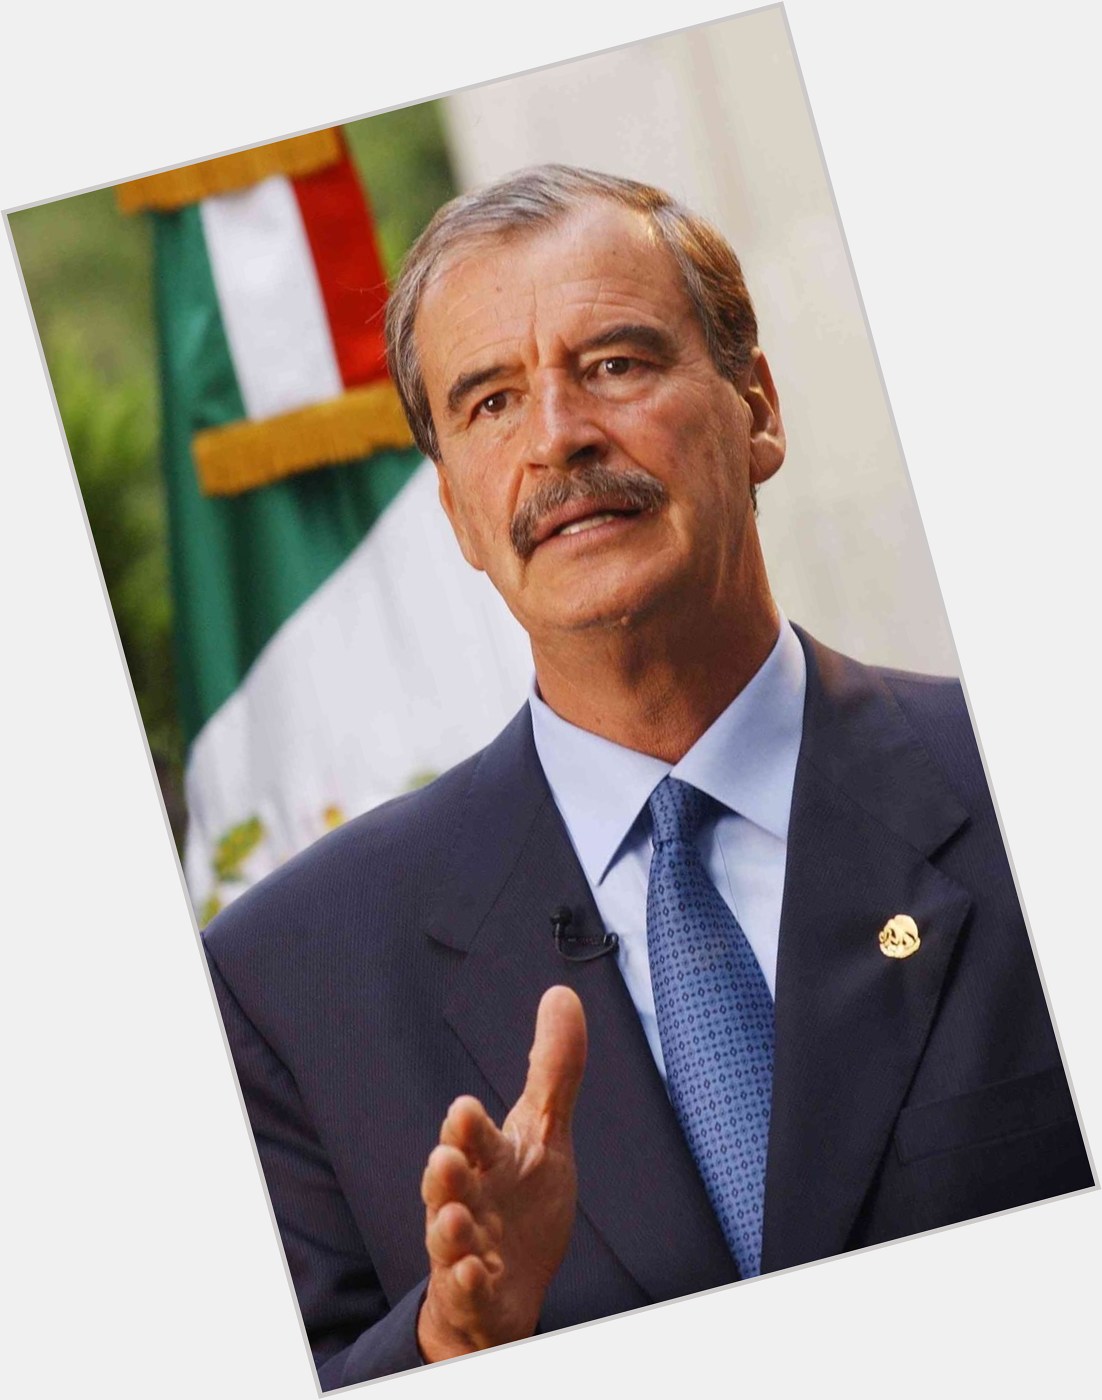 Vicente Fox new pic 1.jpg